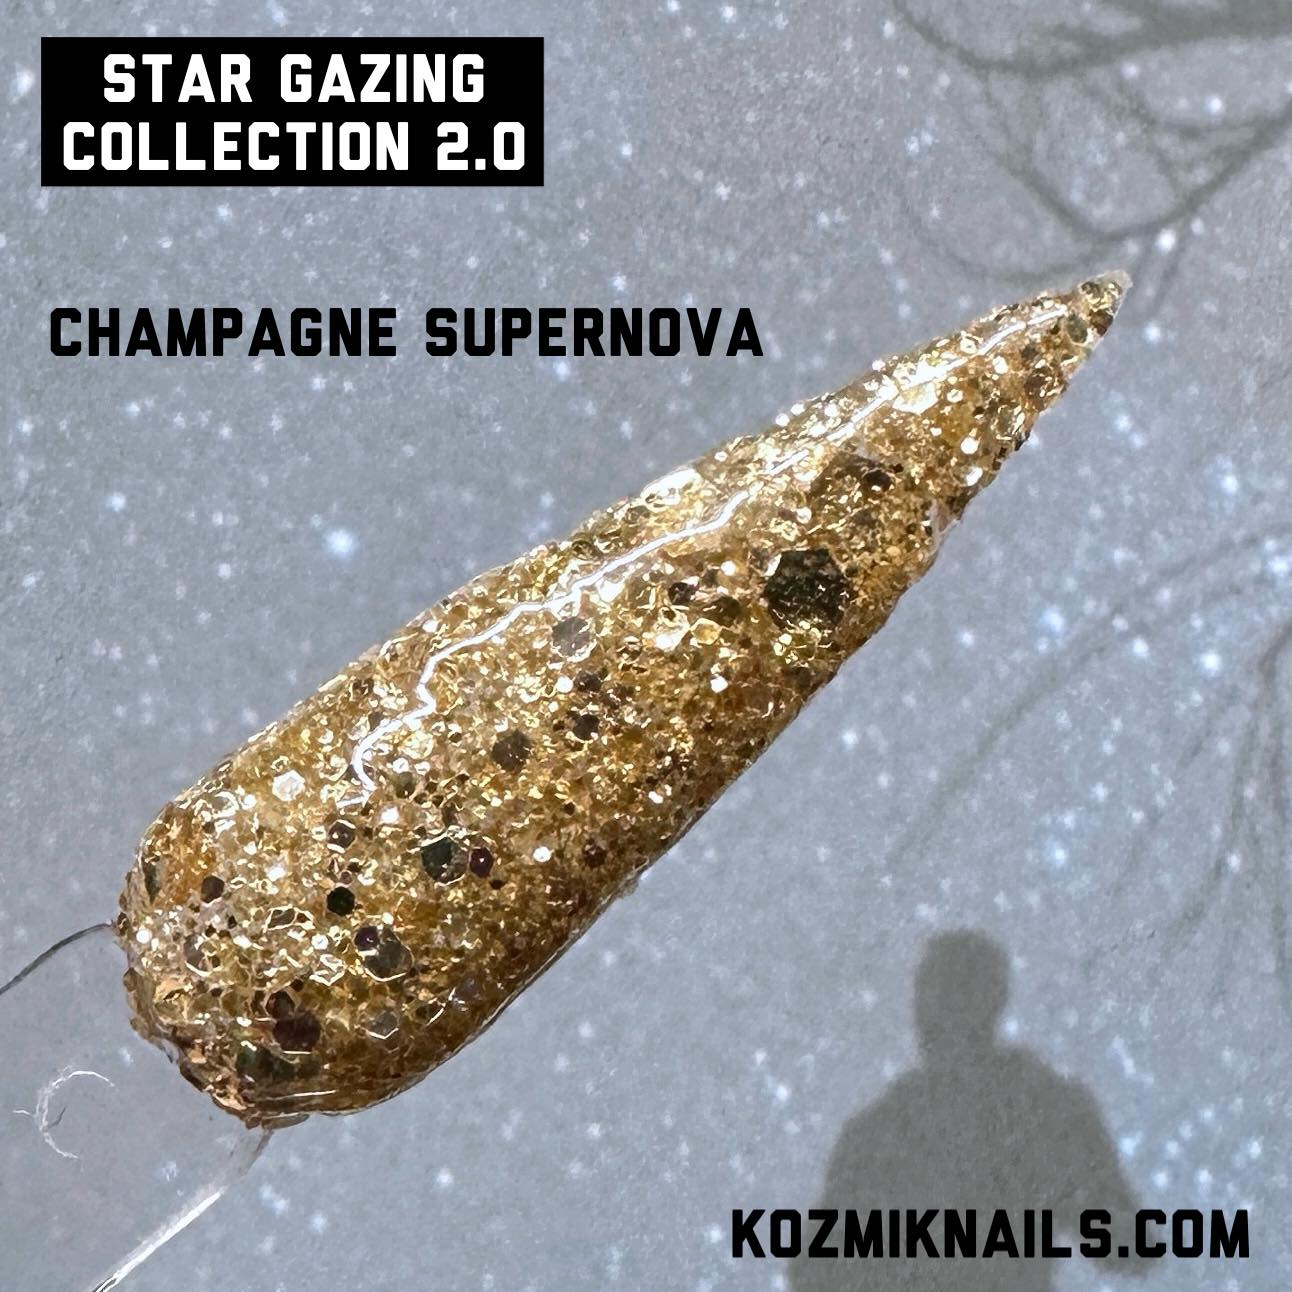 Supernova champenoise